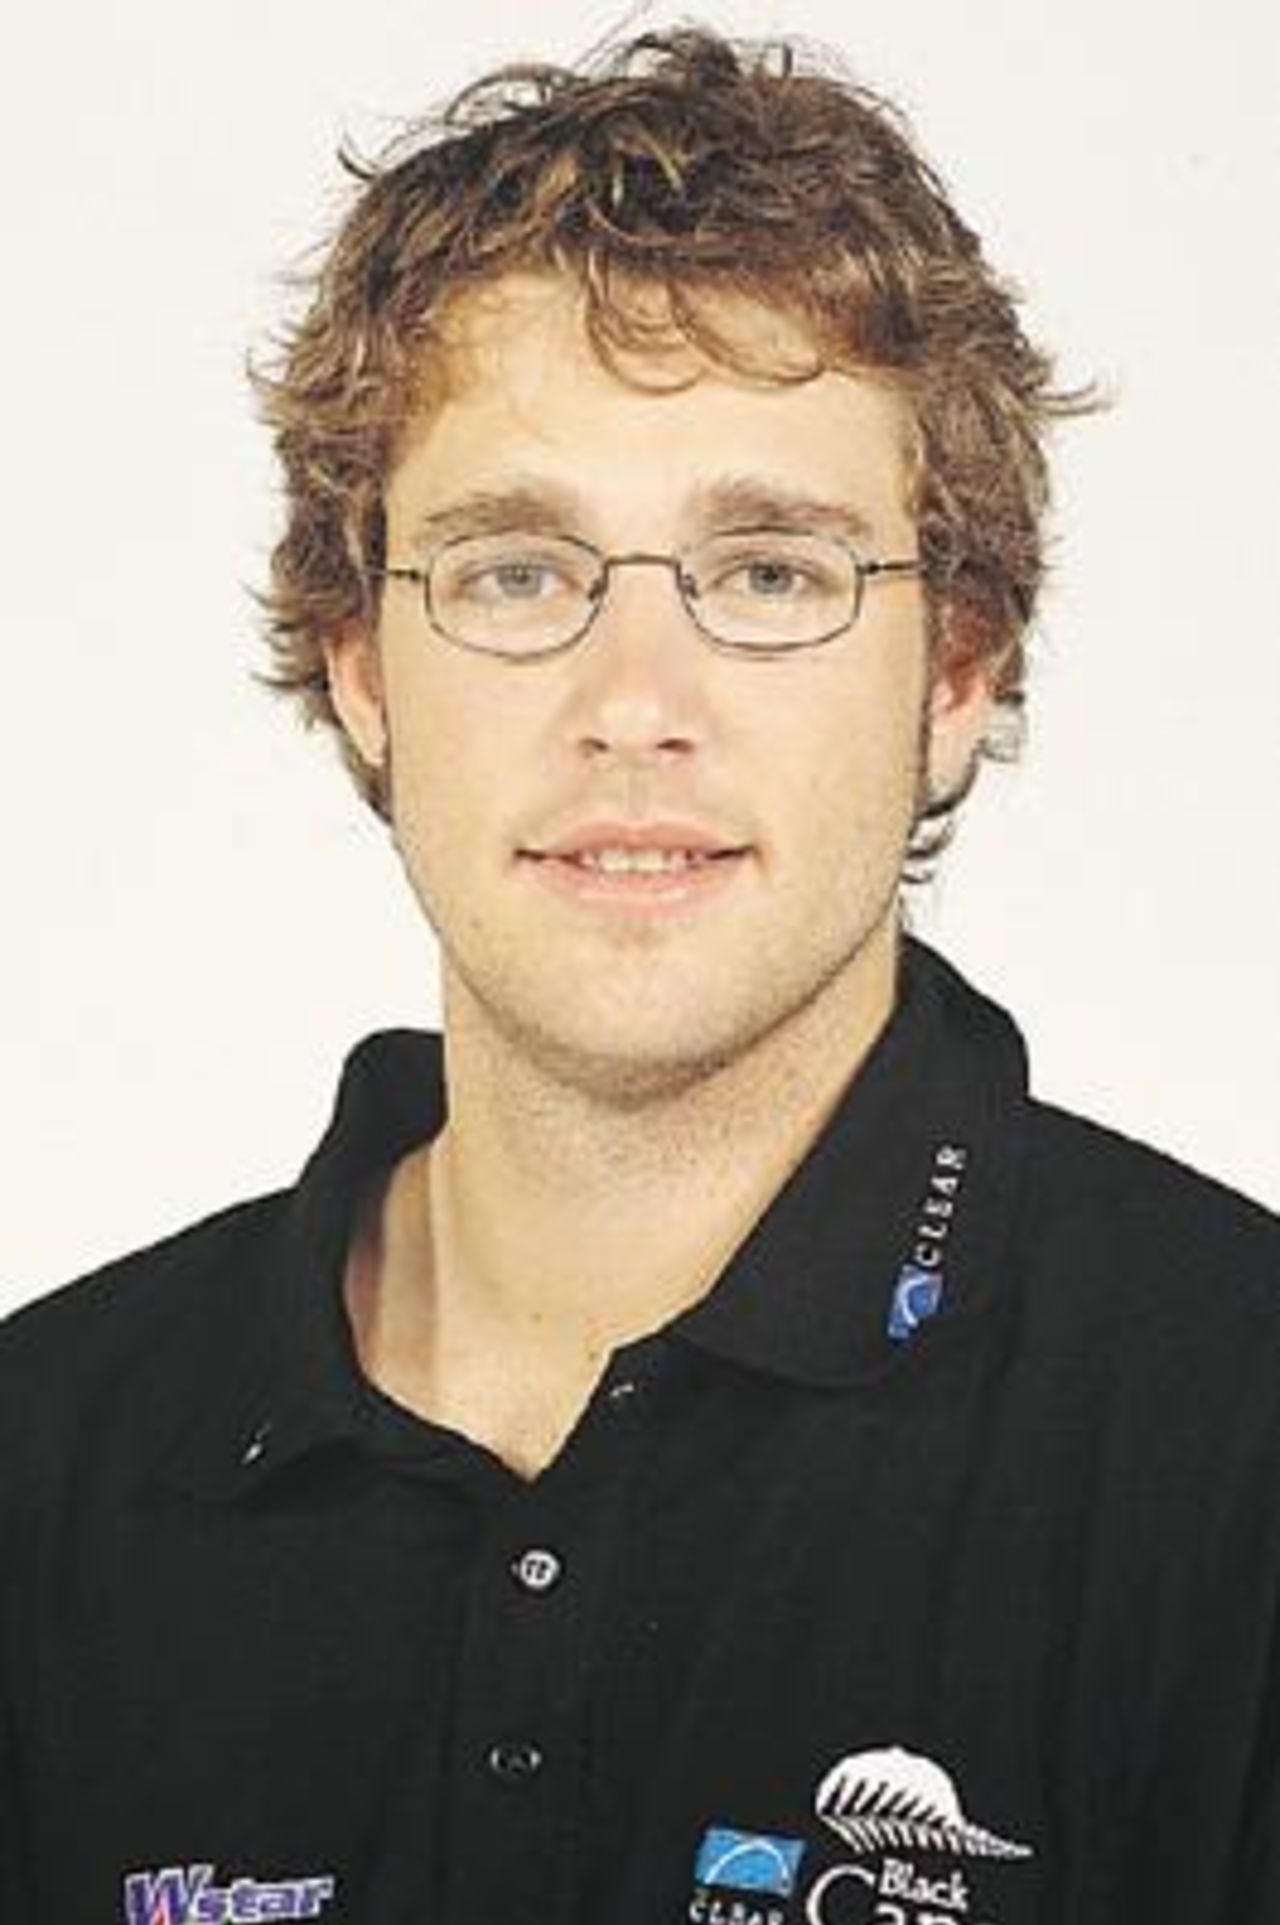 Portrait of Daniel Vettori - New Zealand player in the 2000/01 season